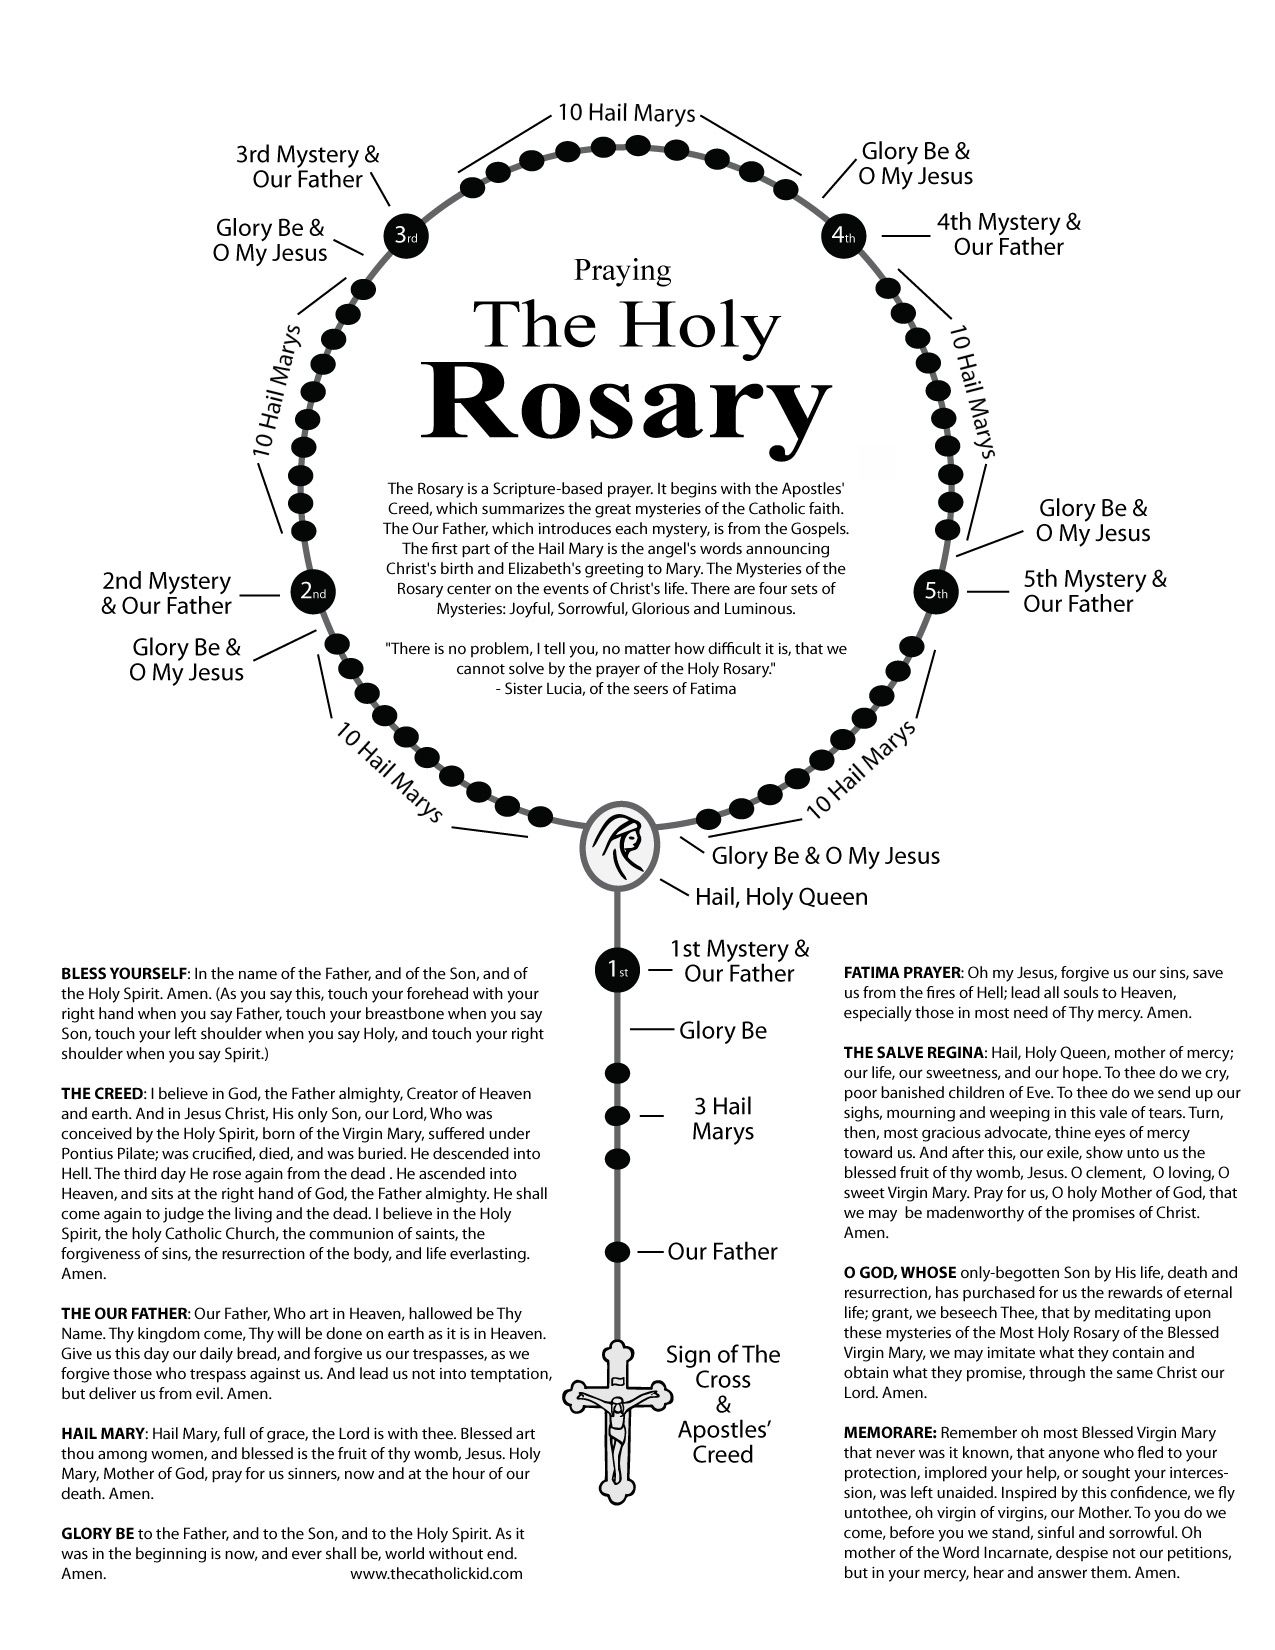 How to pray the holy rosary?